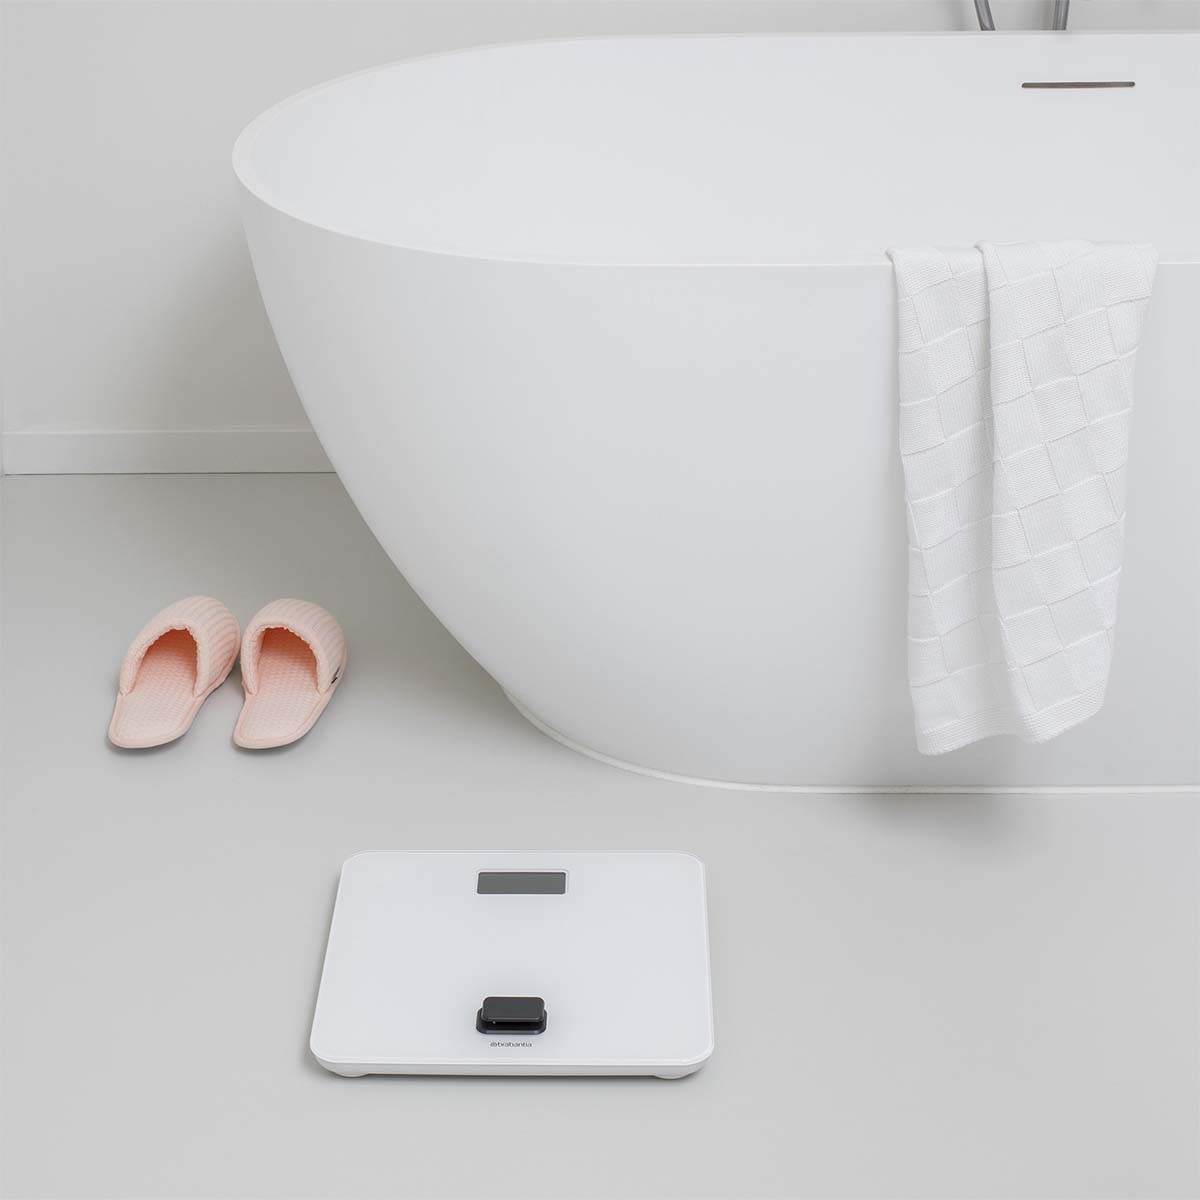 Báscula para baño digital 5/150 k blanco Brabantia